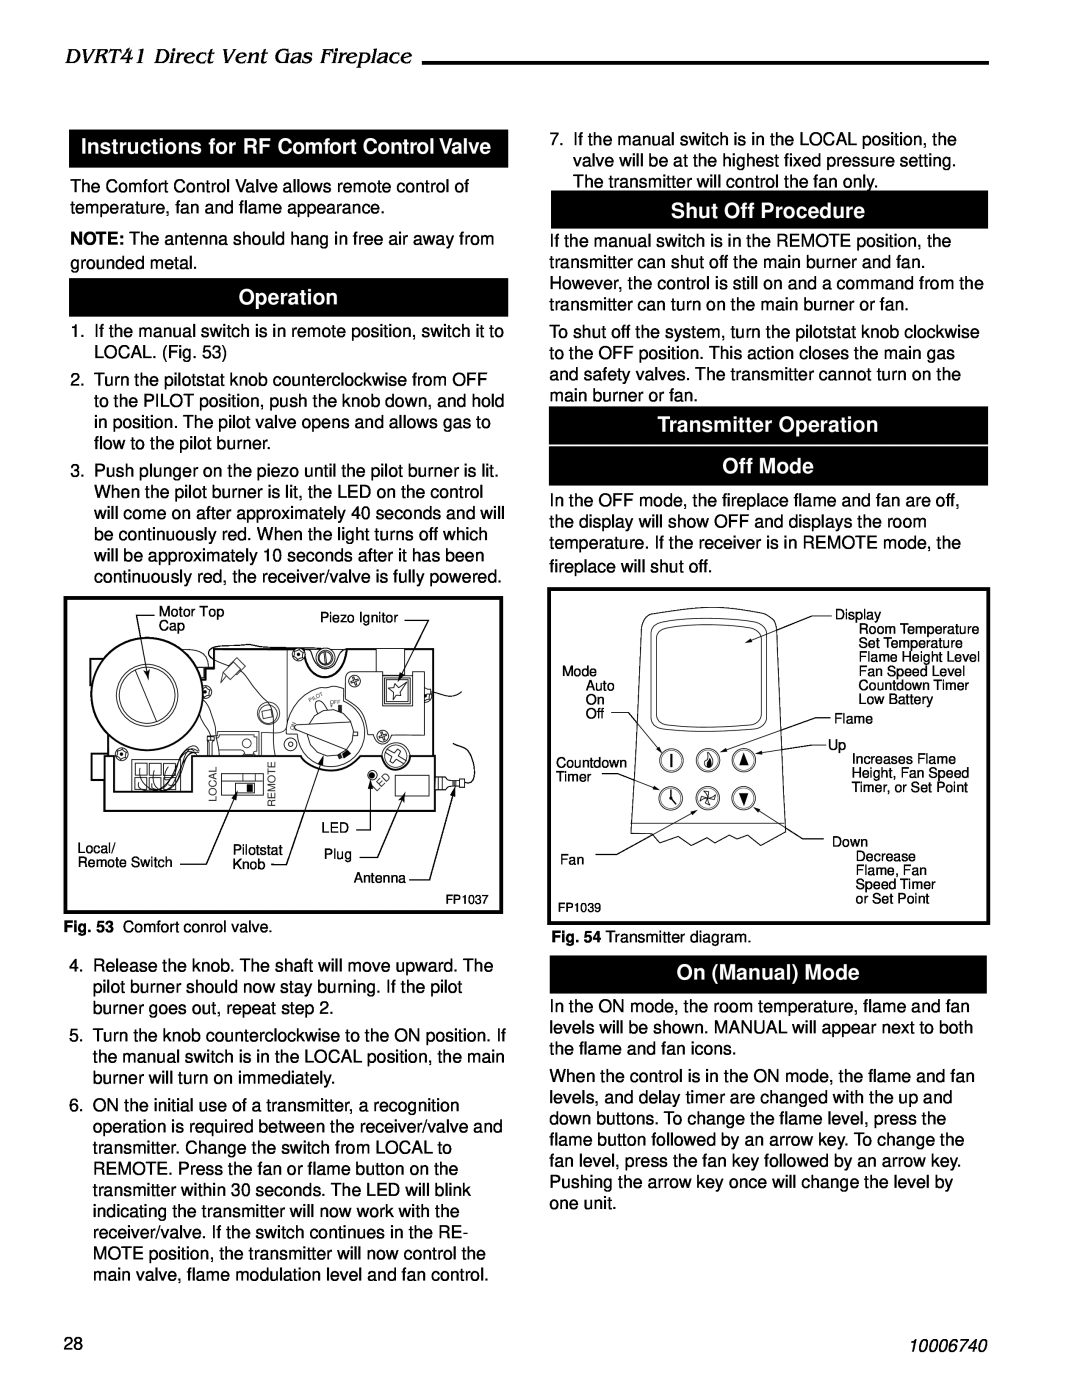 Vermont Casting DVRT41 Instructions for RF Comfort Control Valve, Operation, Shut Off Procedure, On Manual Mode, 10006740 